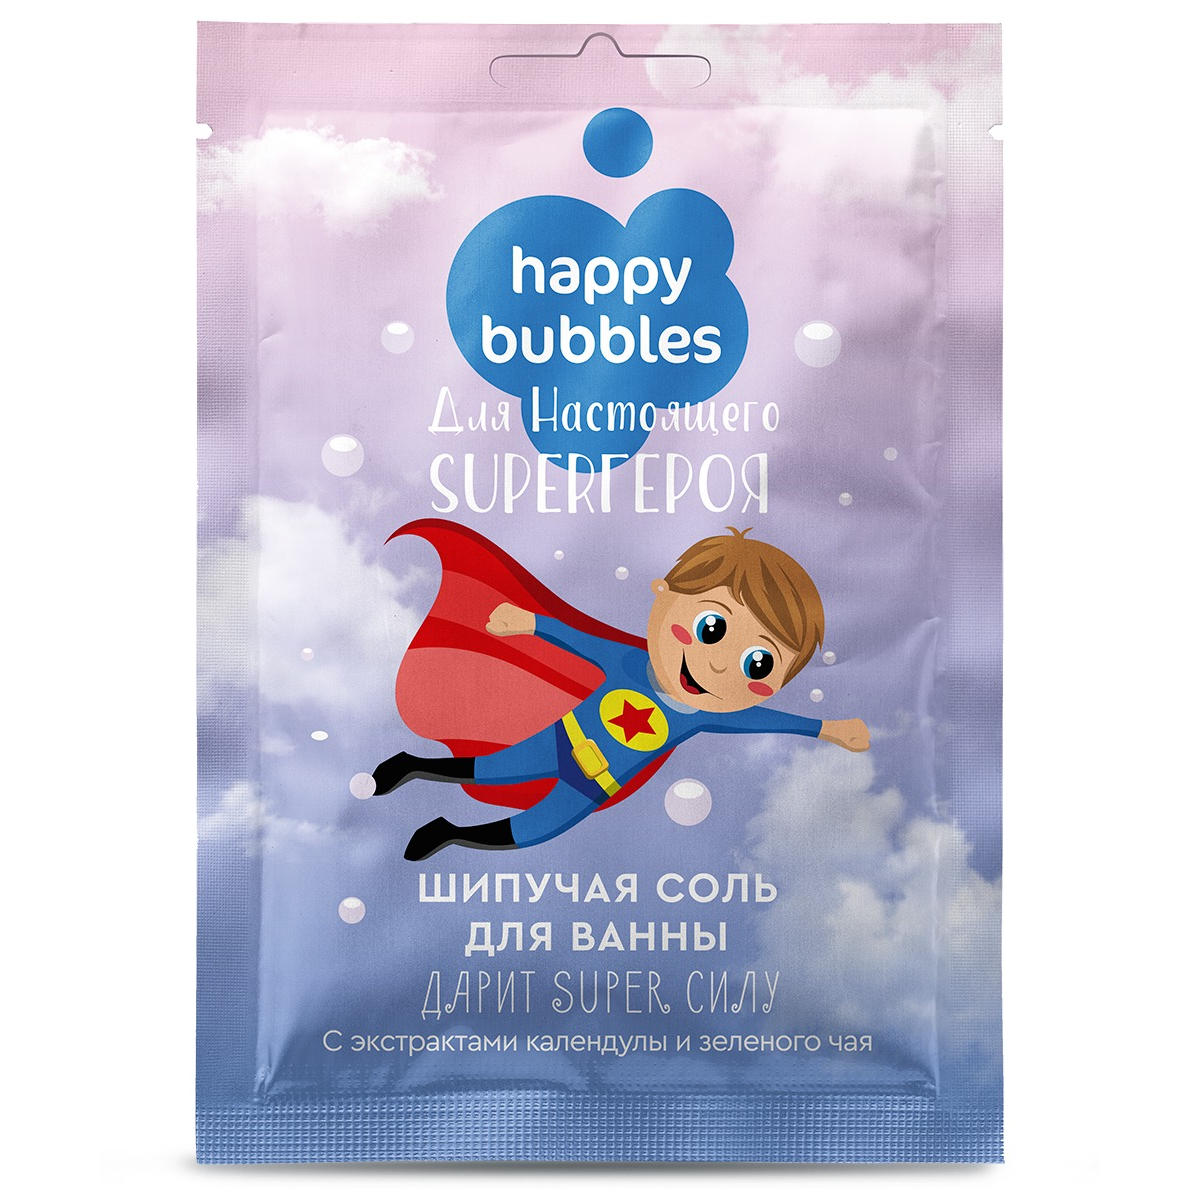 Соль для ванны Happy bubbles для настоя Super героя 100г расслабляющая соль для ванны